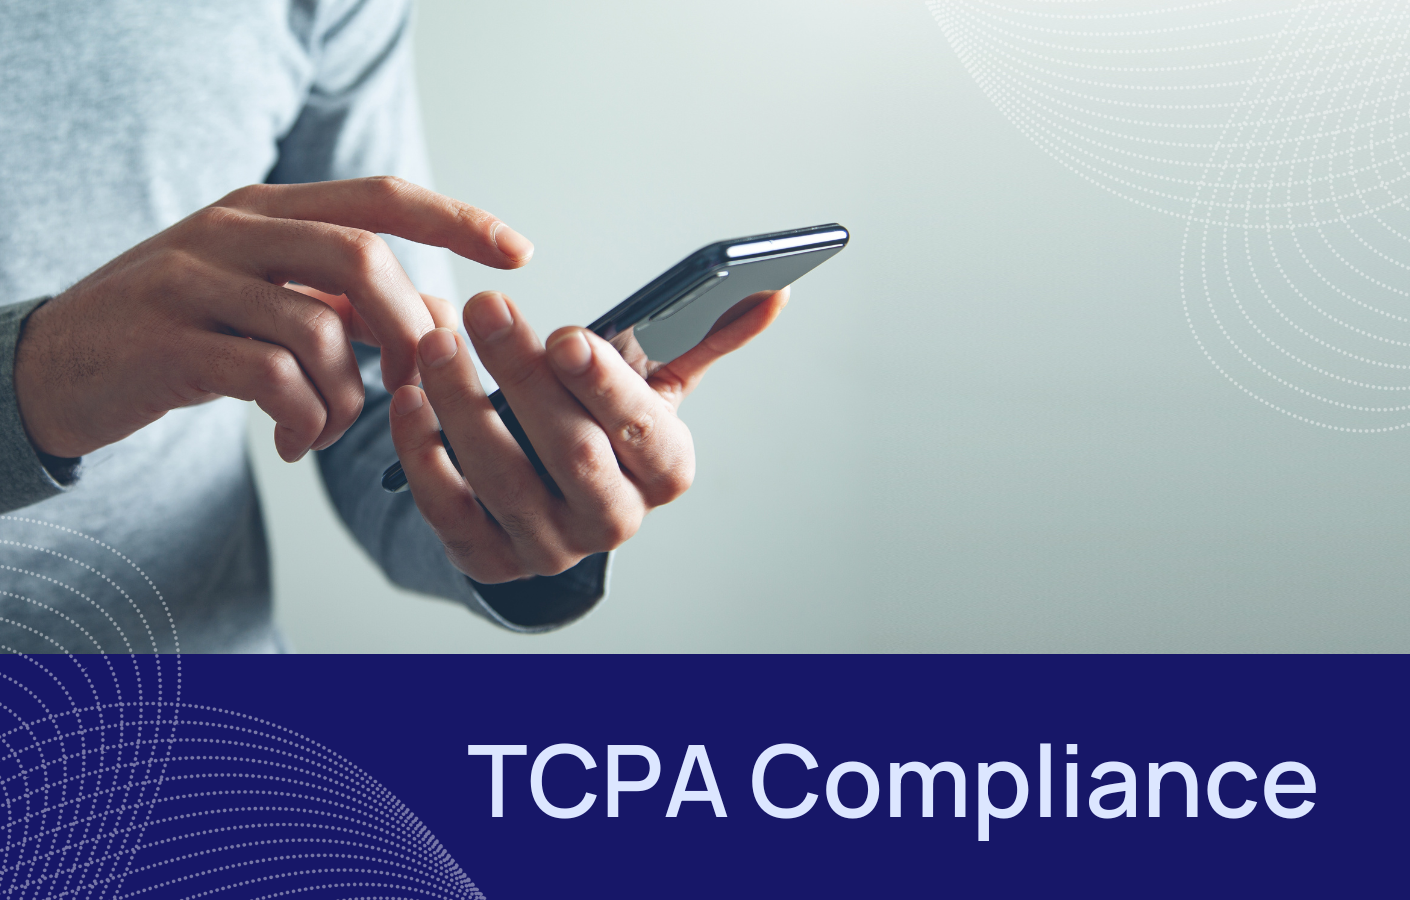 TCPA Compliance Summary